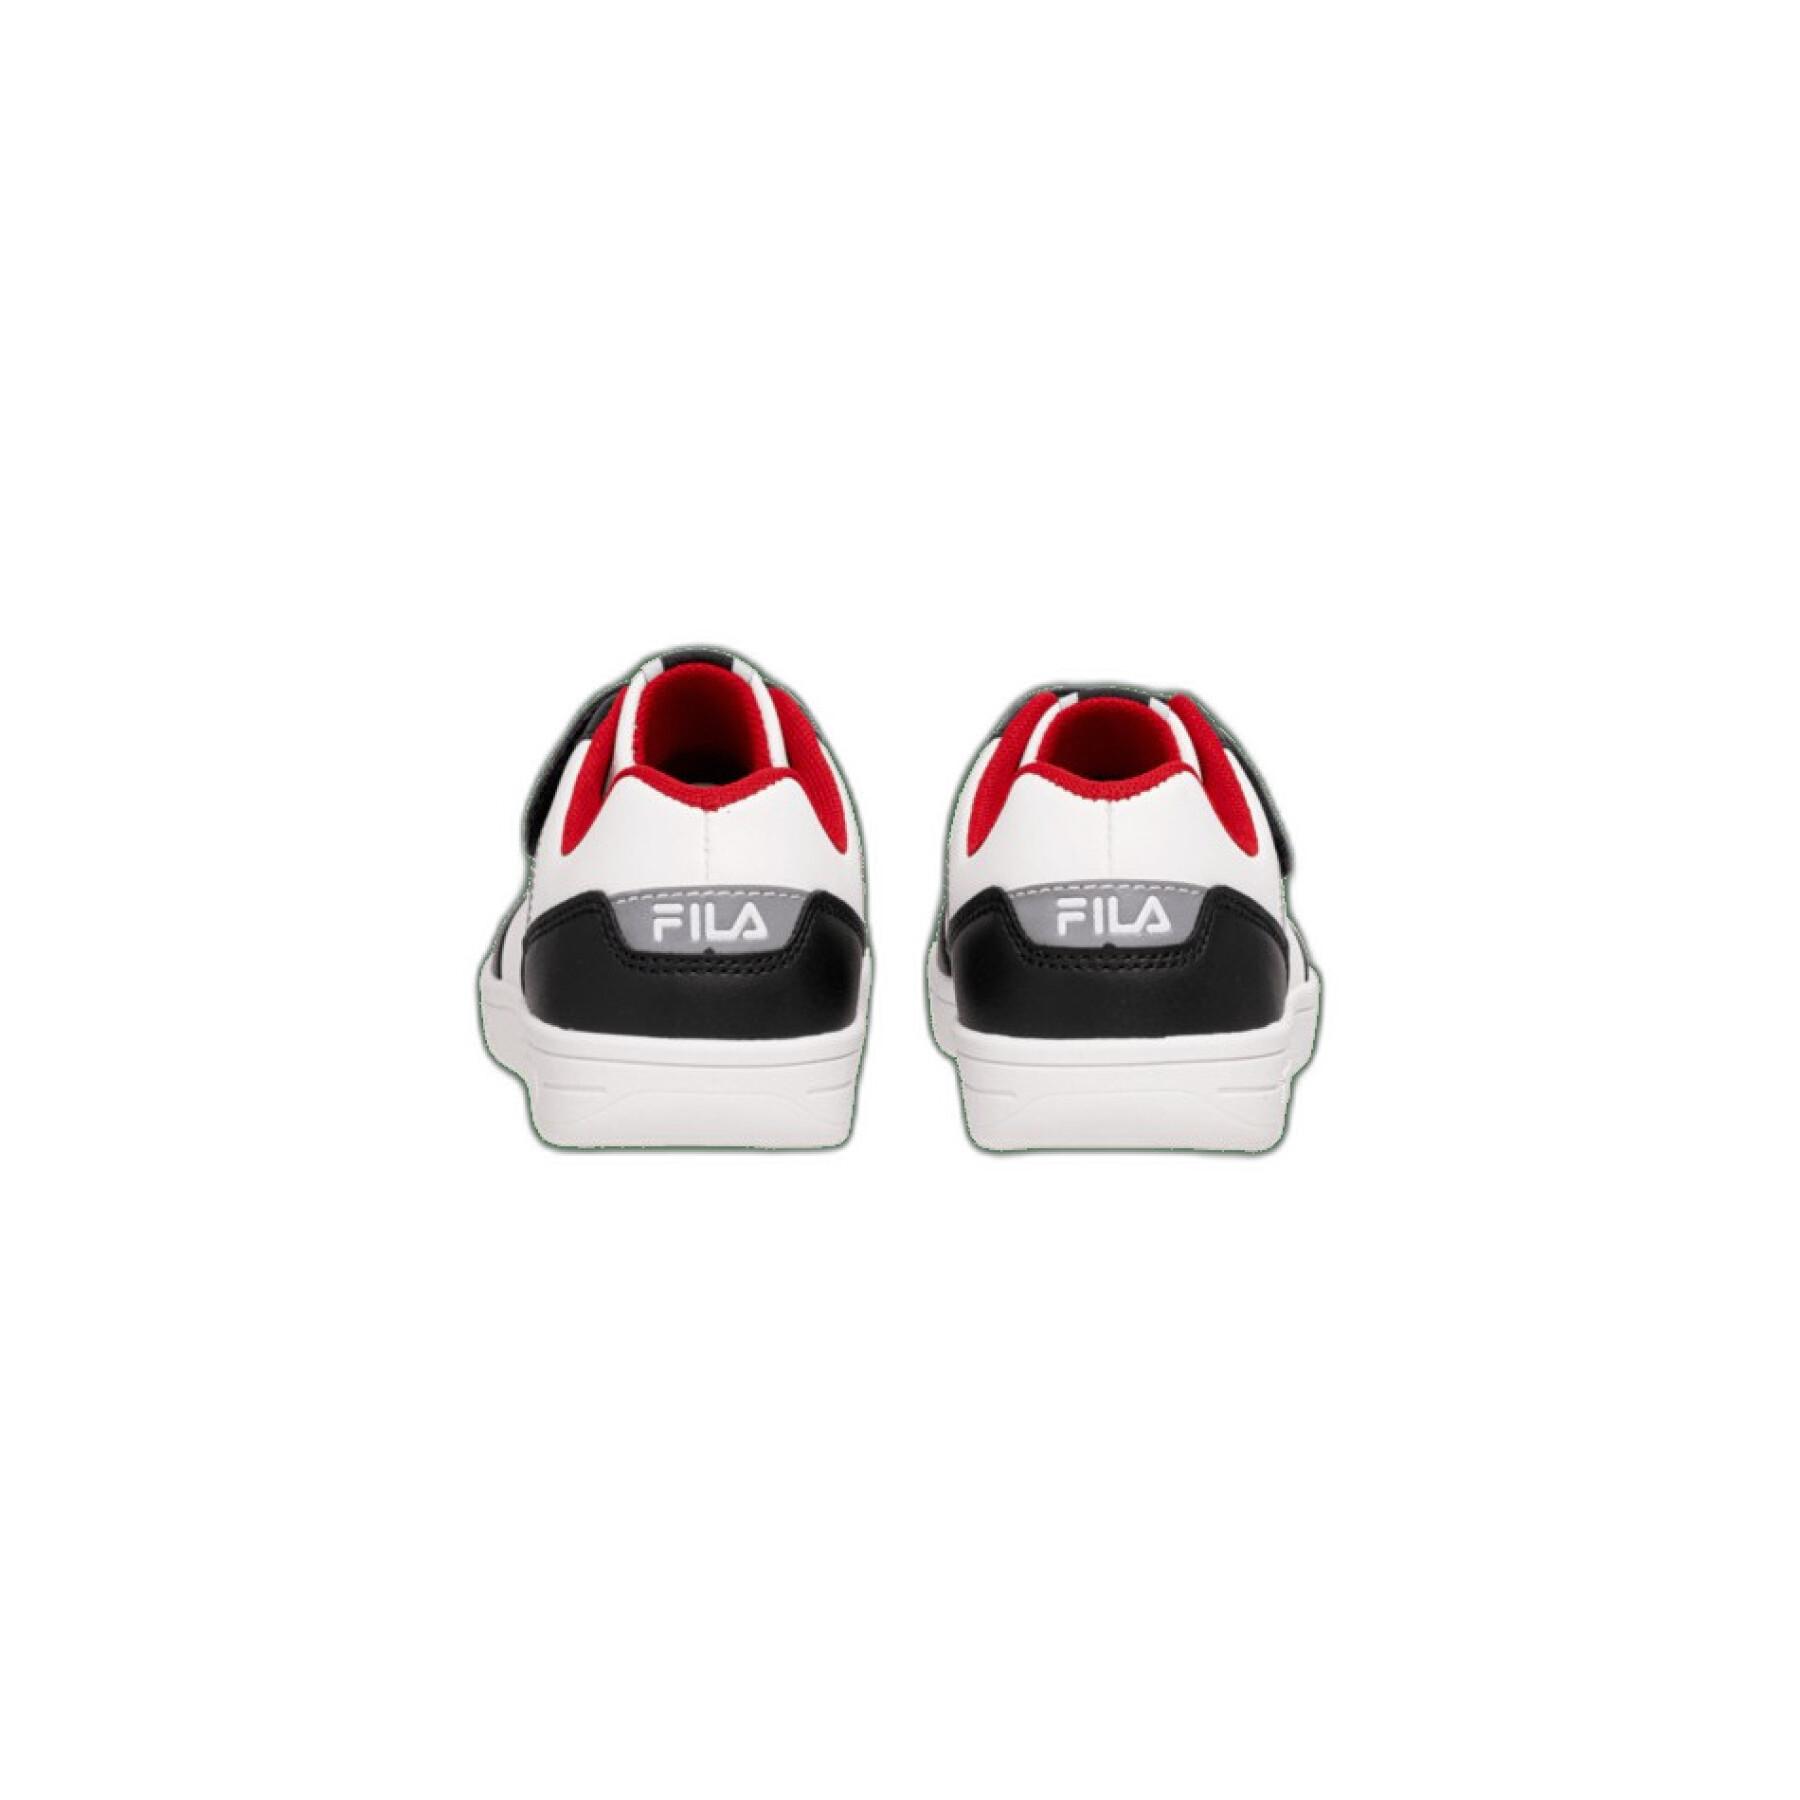 Children's sneakers Fila C. Court Cb Velcro - Fila - Brands - Lifestyle